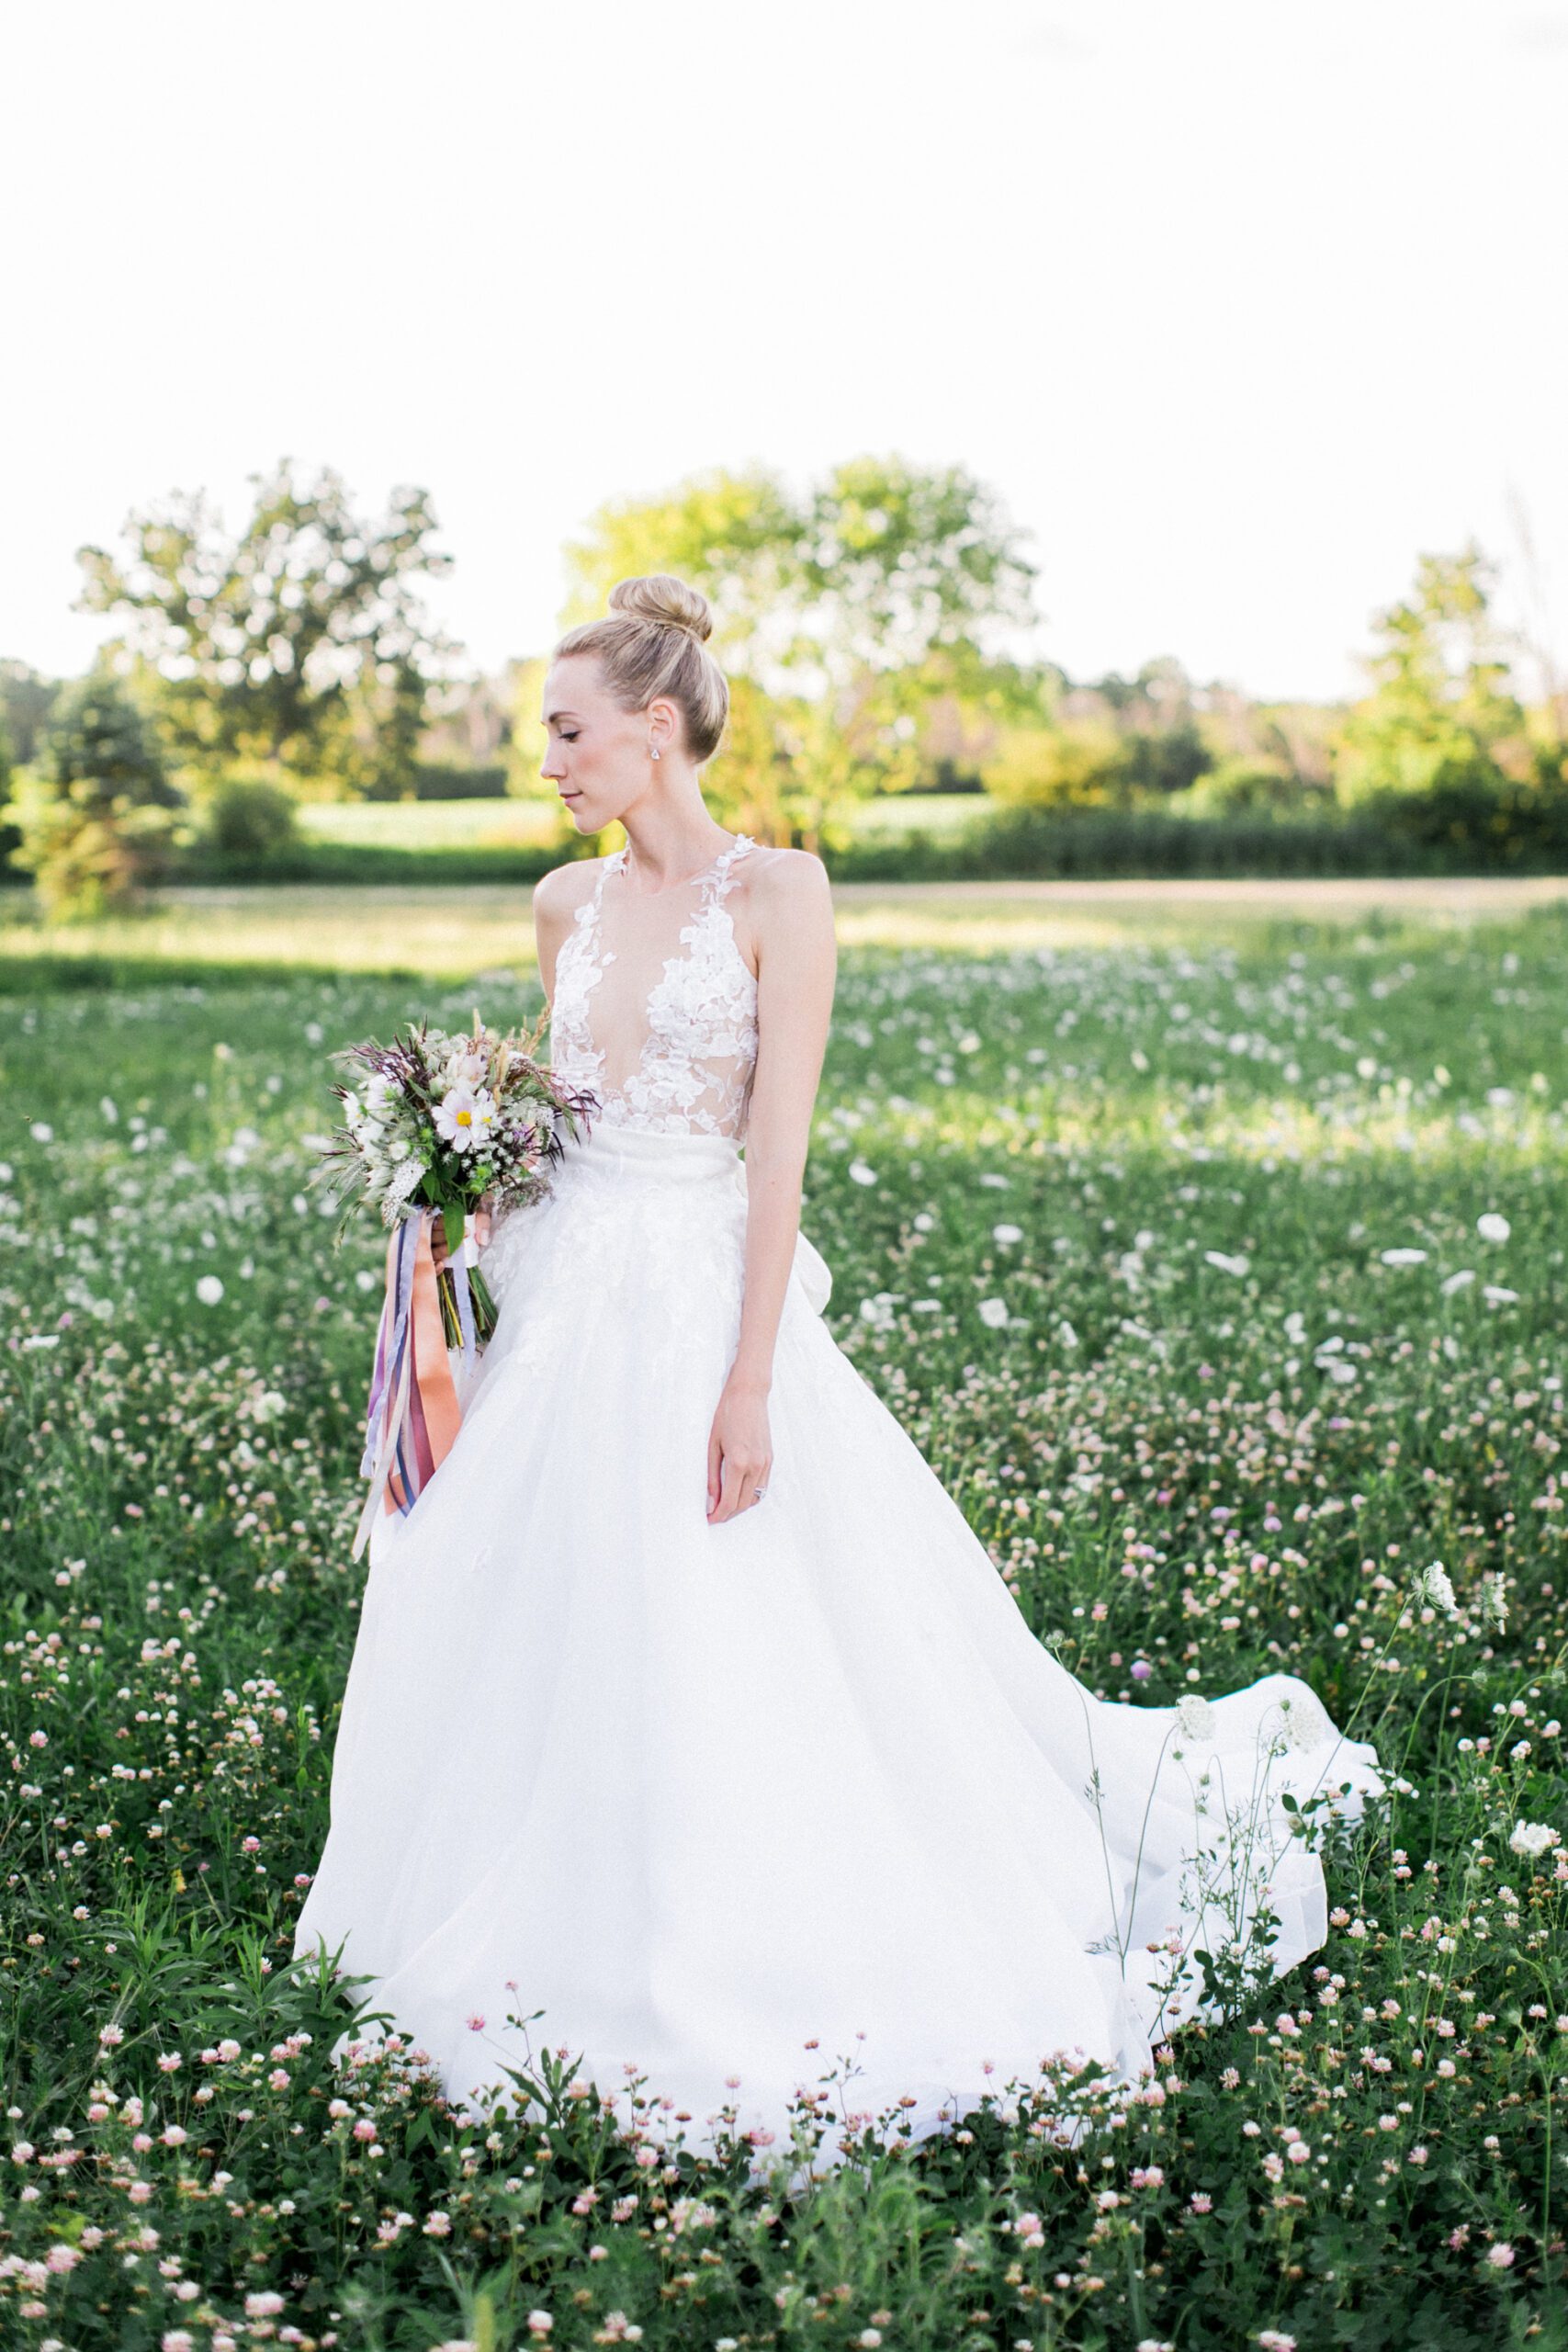 A bride walks through a field of wildflowers